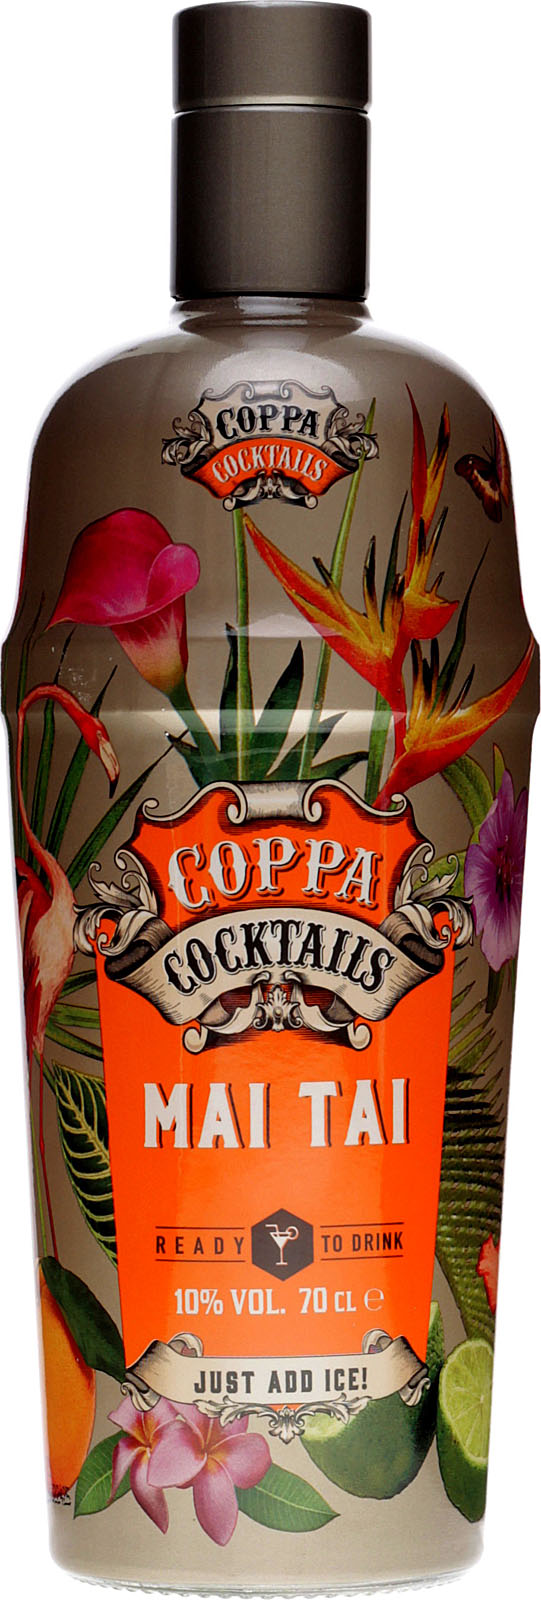 Coppa Cocktails Mai Tai 0,7 Liter 10 % Vol.